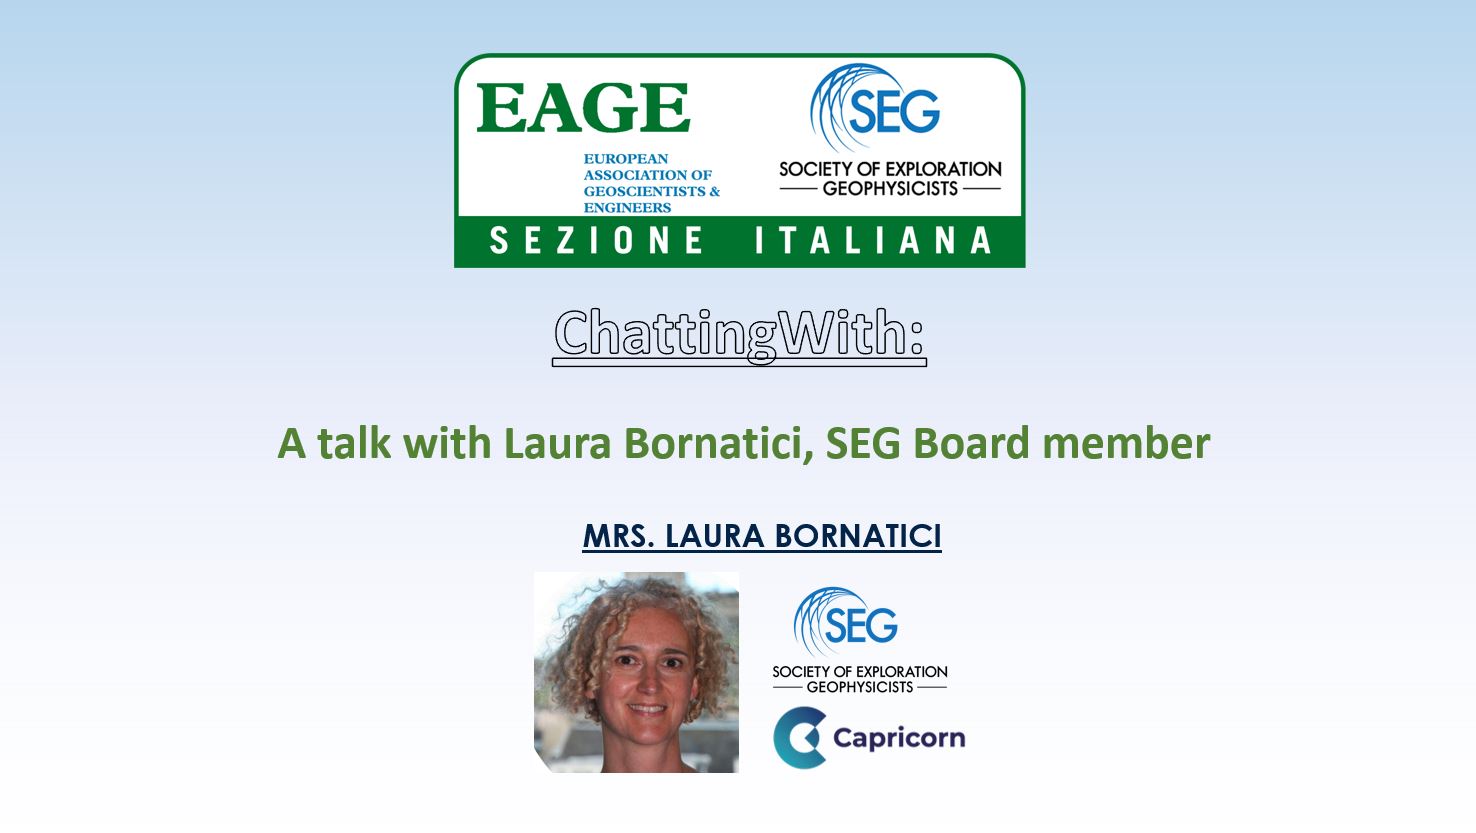 ChattingWith “A talk with Laura Bornatici, SEG Board Member”